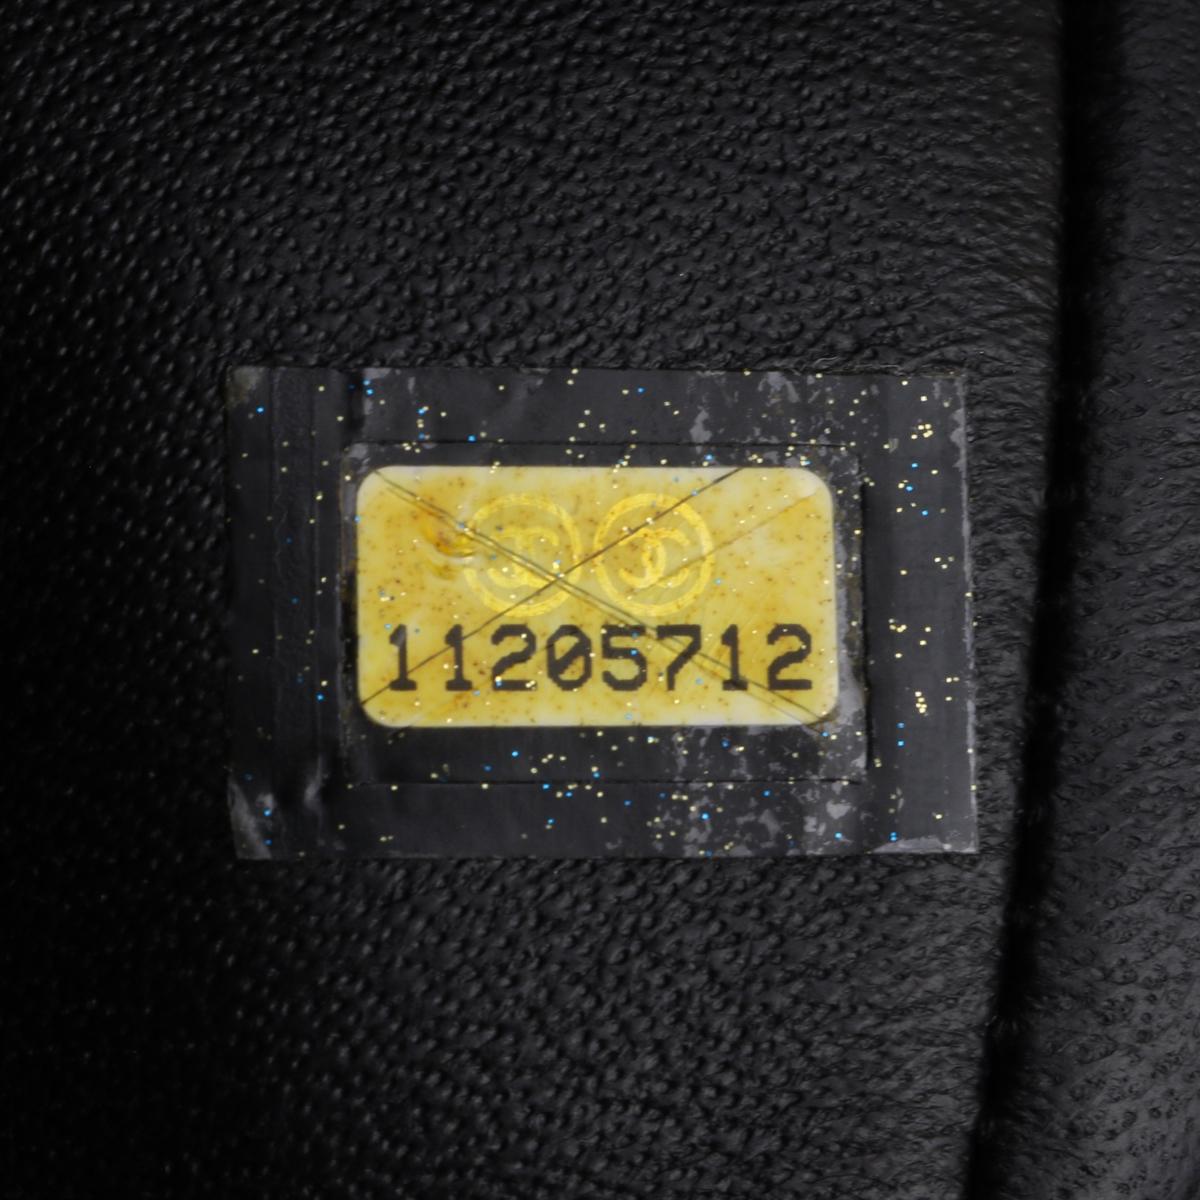 CHANEL Single Flap Jumbo Bag Black Caviar with 24k Gold Plated Hardware 2007 10